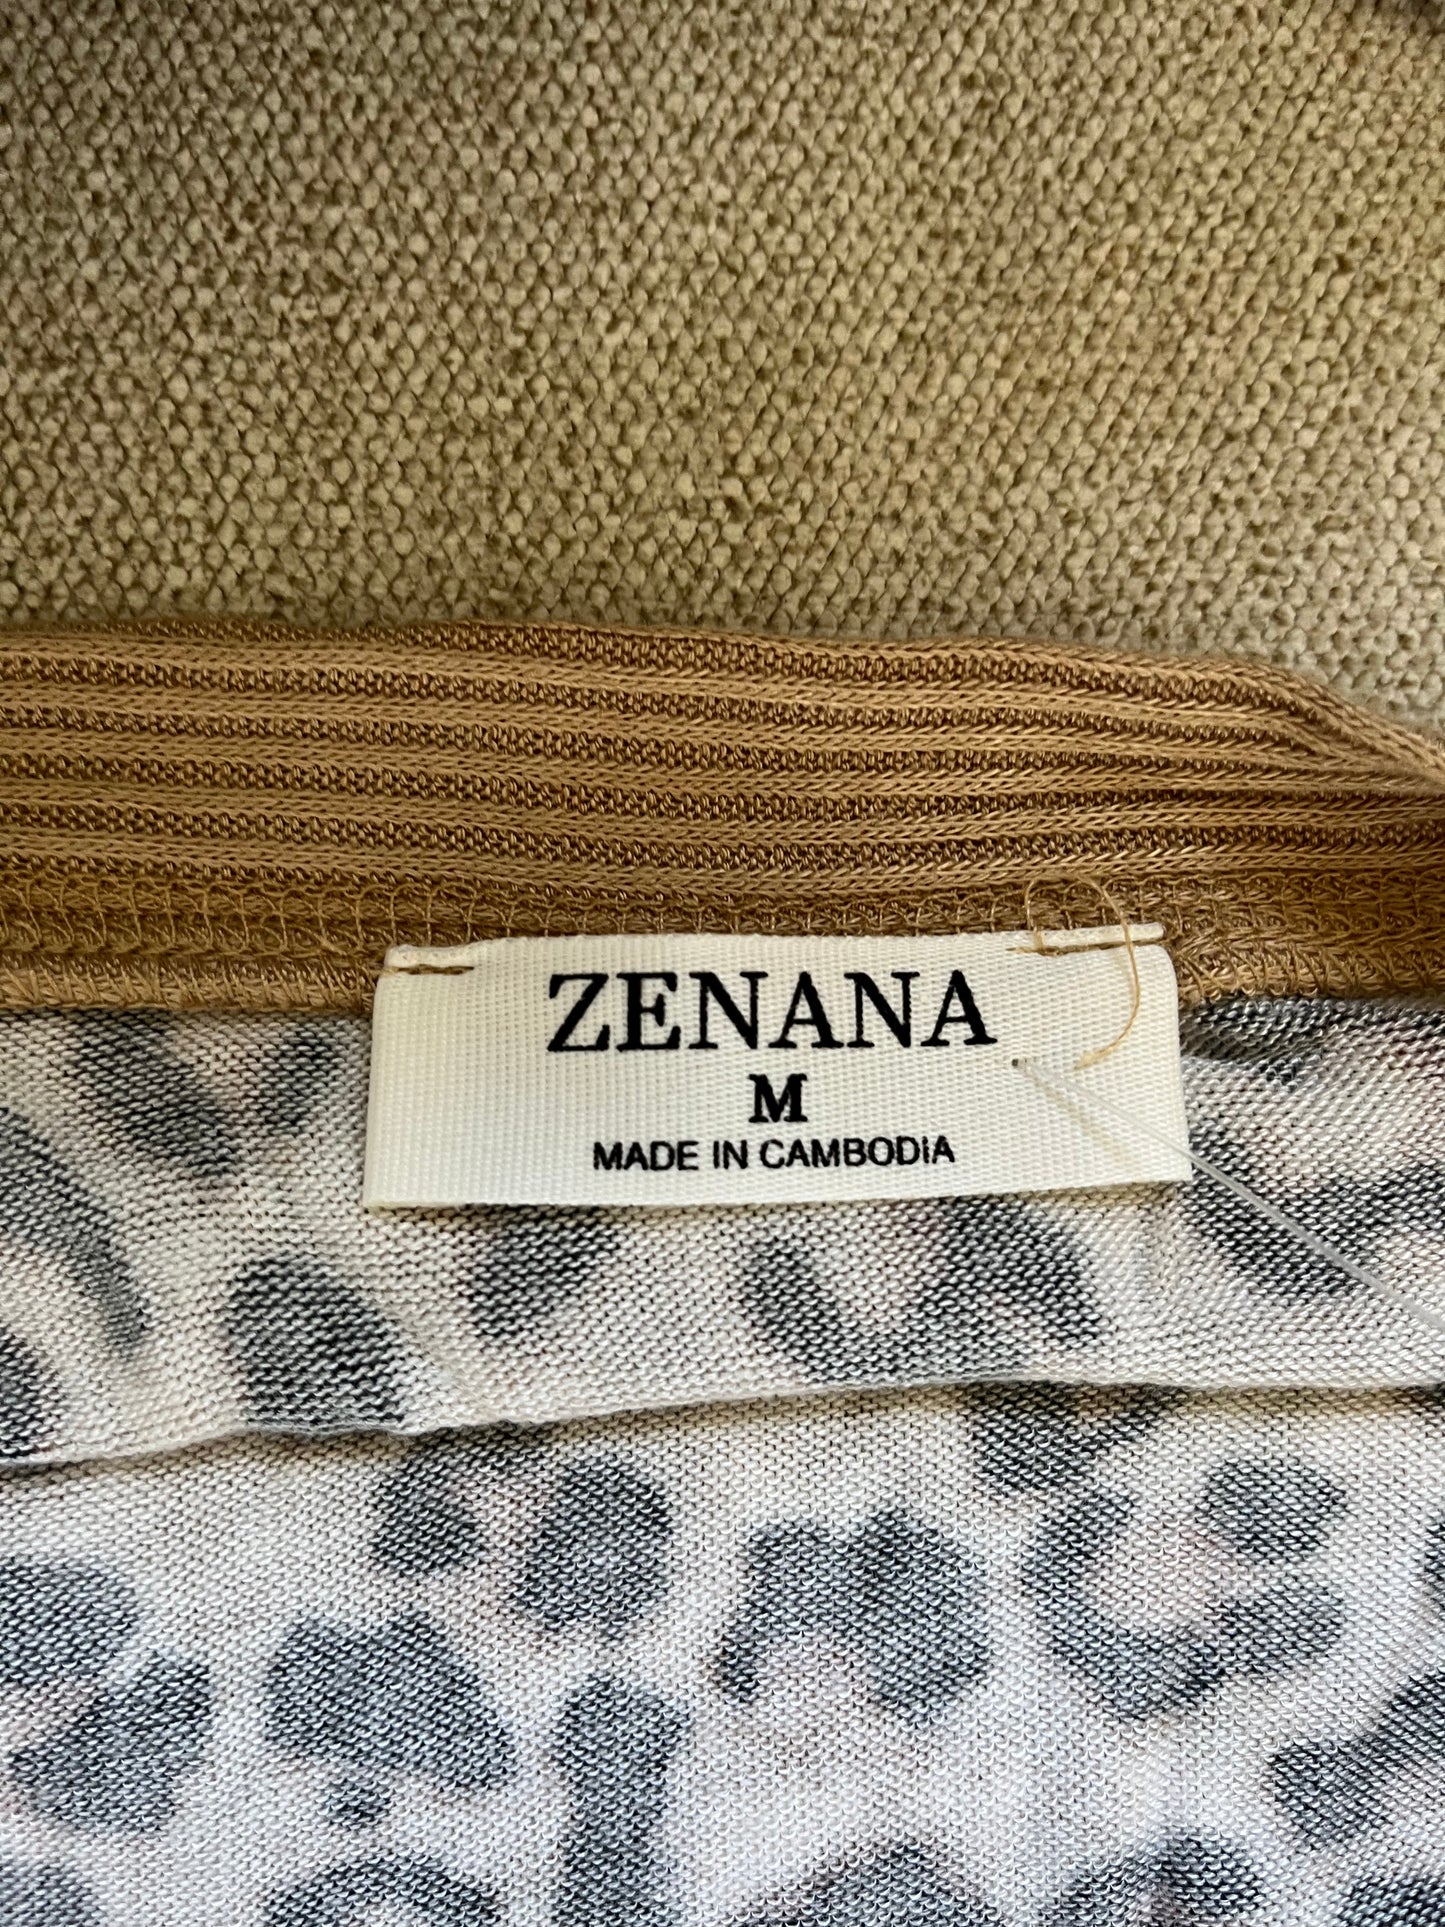 Zenana Leopard Cardigan